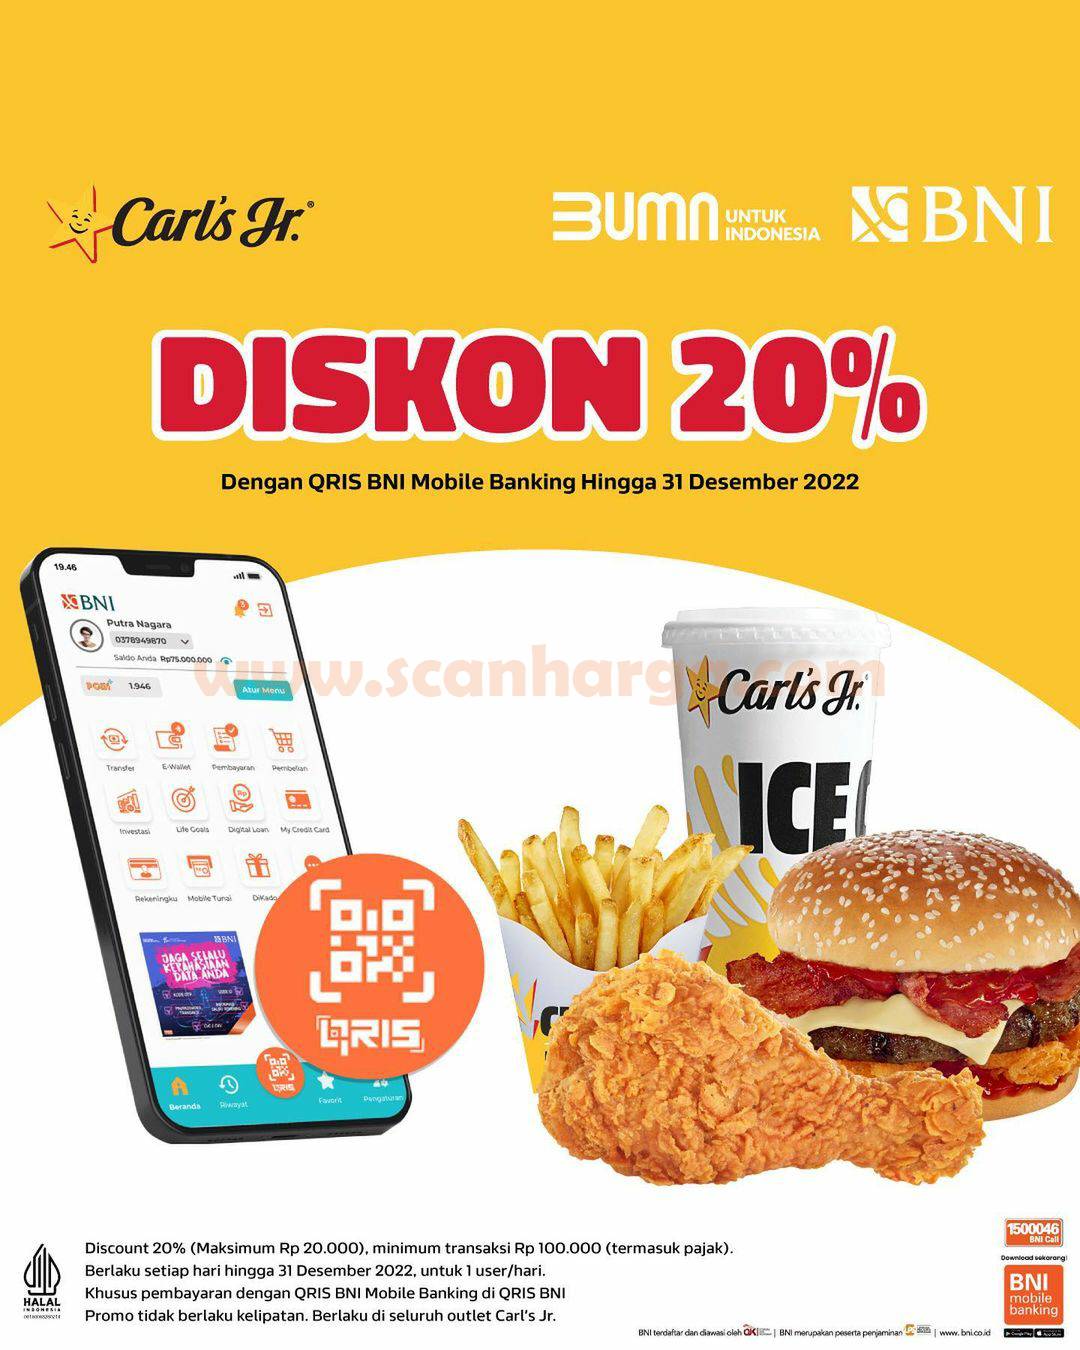 Promo CARLS JR DISKON 20% – dengan QRIS BNI Mobile Banking